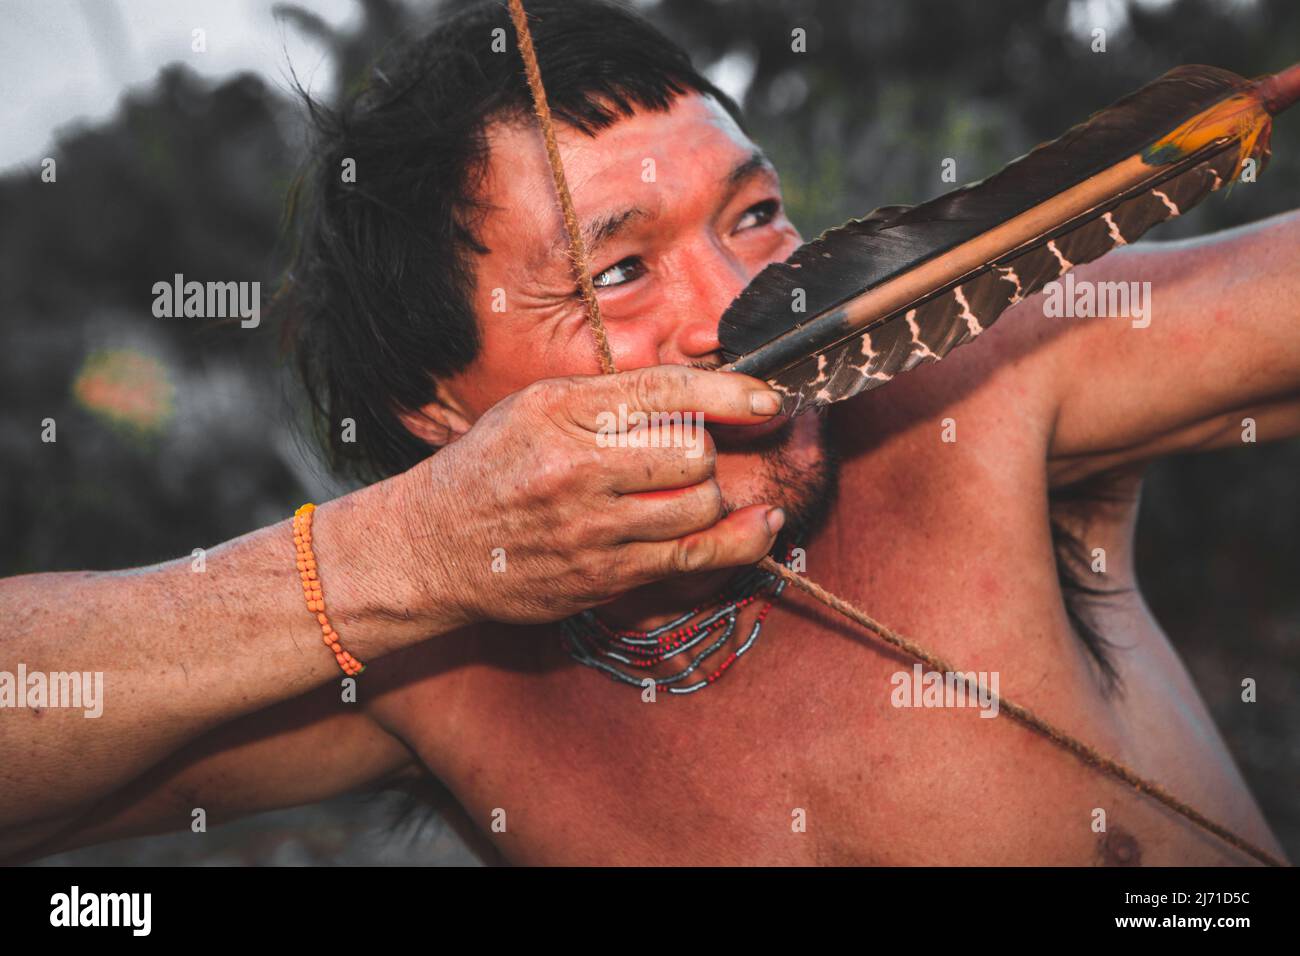 Amazon tribe bow arrow -Fotos und -Bildmaterial in hoher Auflösung – Alamy